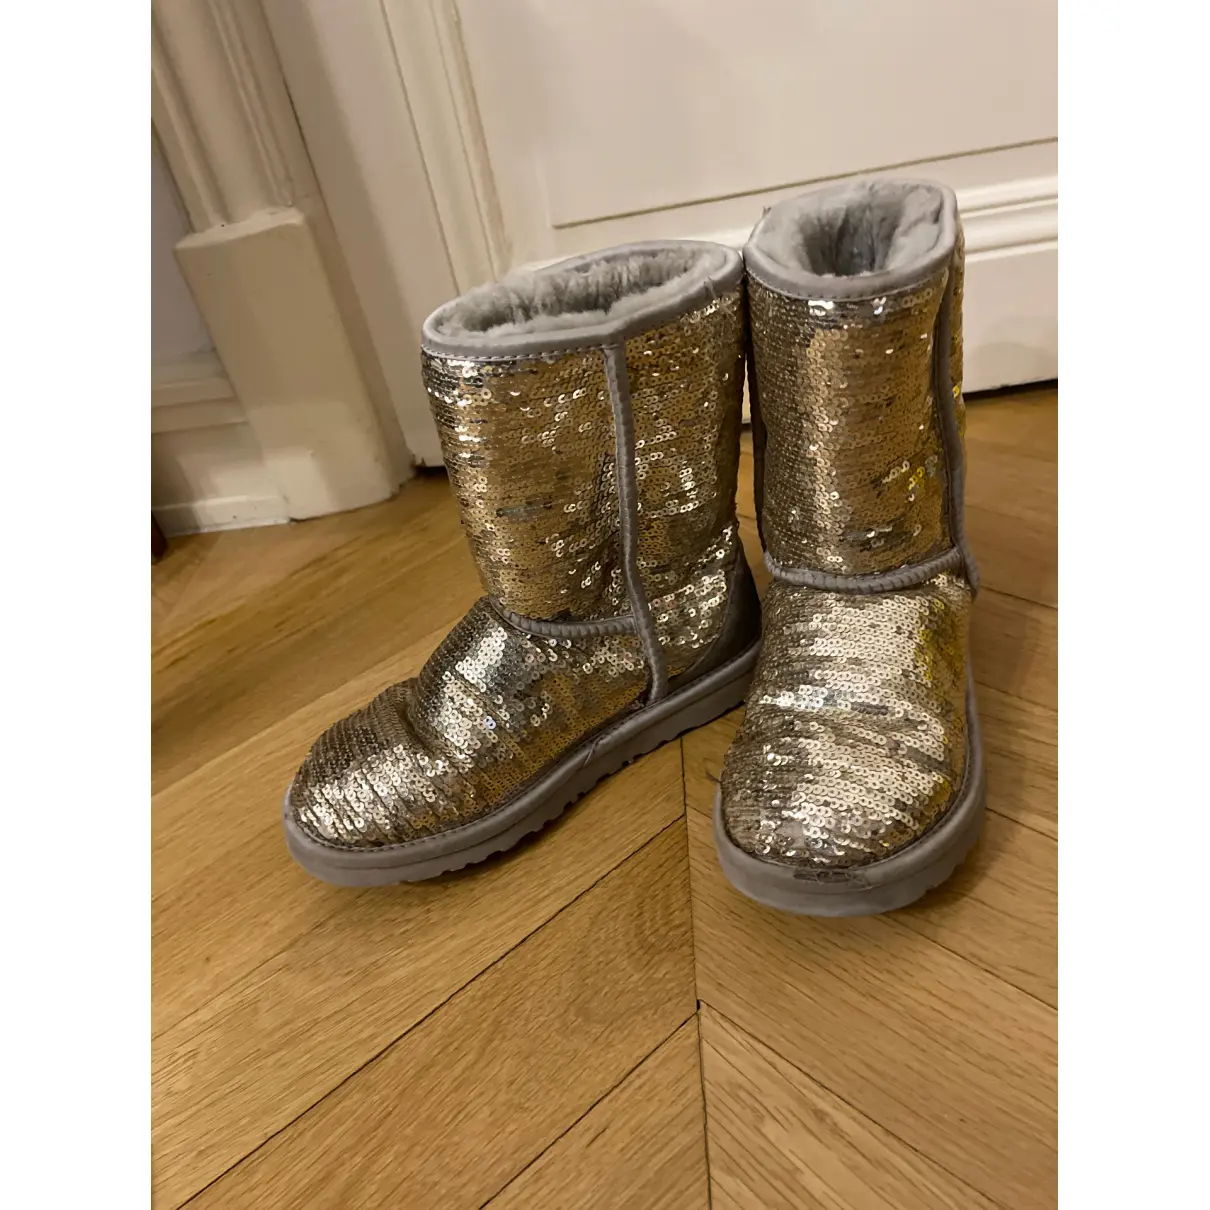 Buy Ugg Glitter boots online